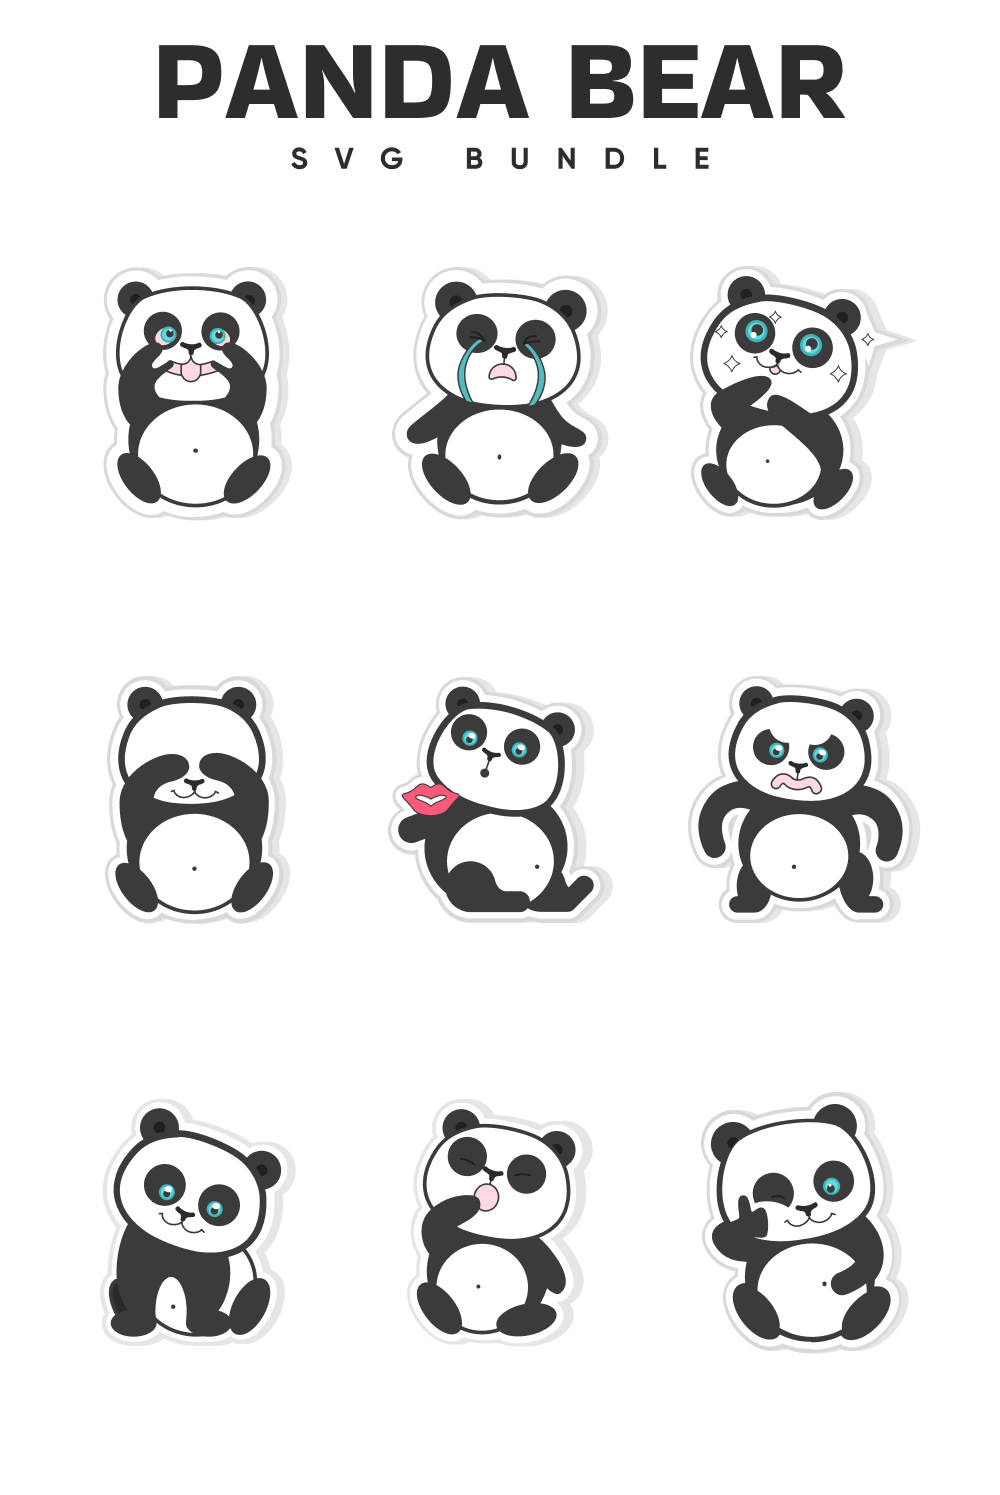 Panda bear sticker set on a white background.